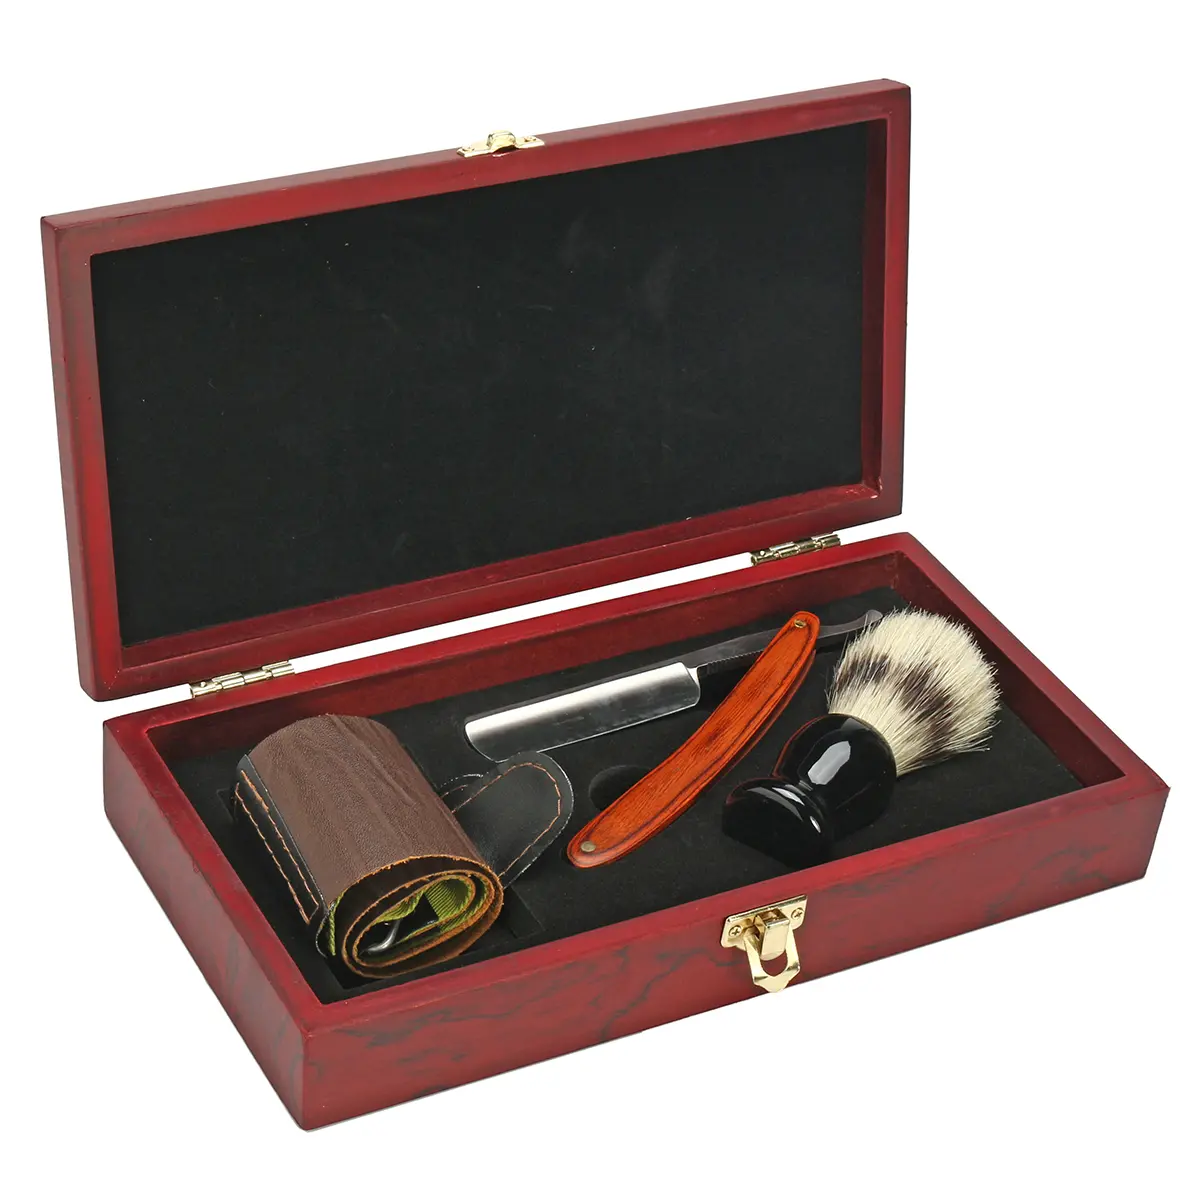 4Pcs Shaver Kit Razor Brush Strop Wooden Box Set